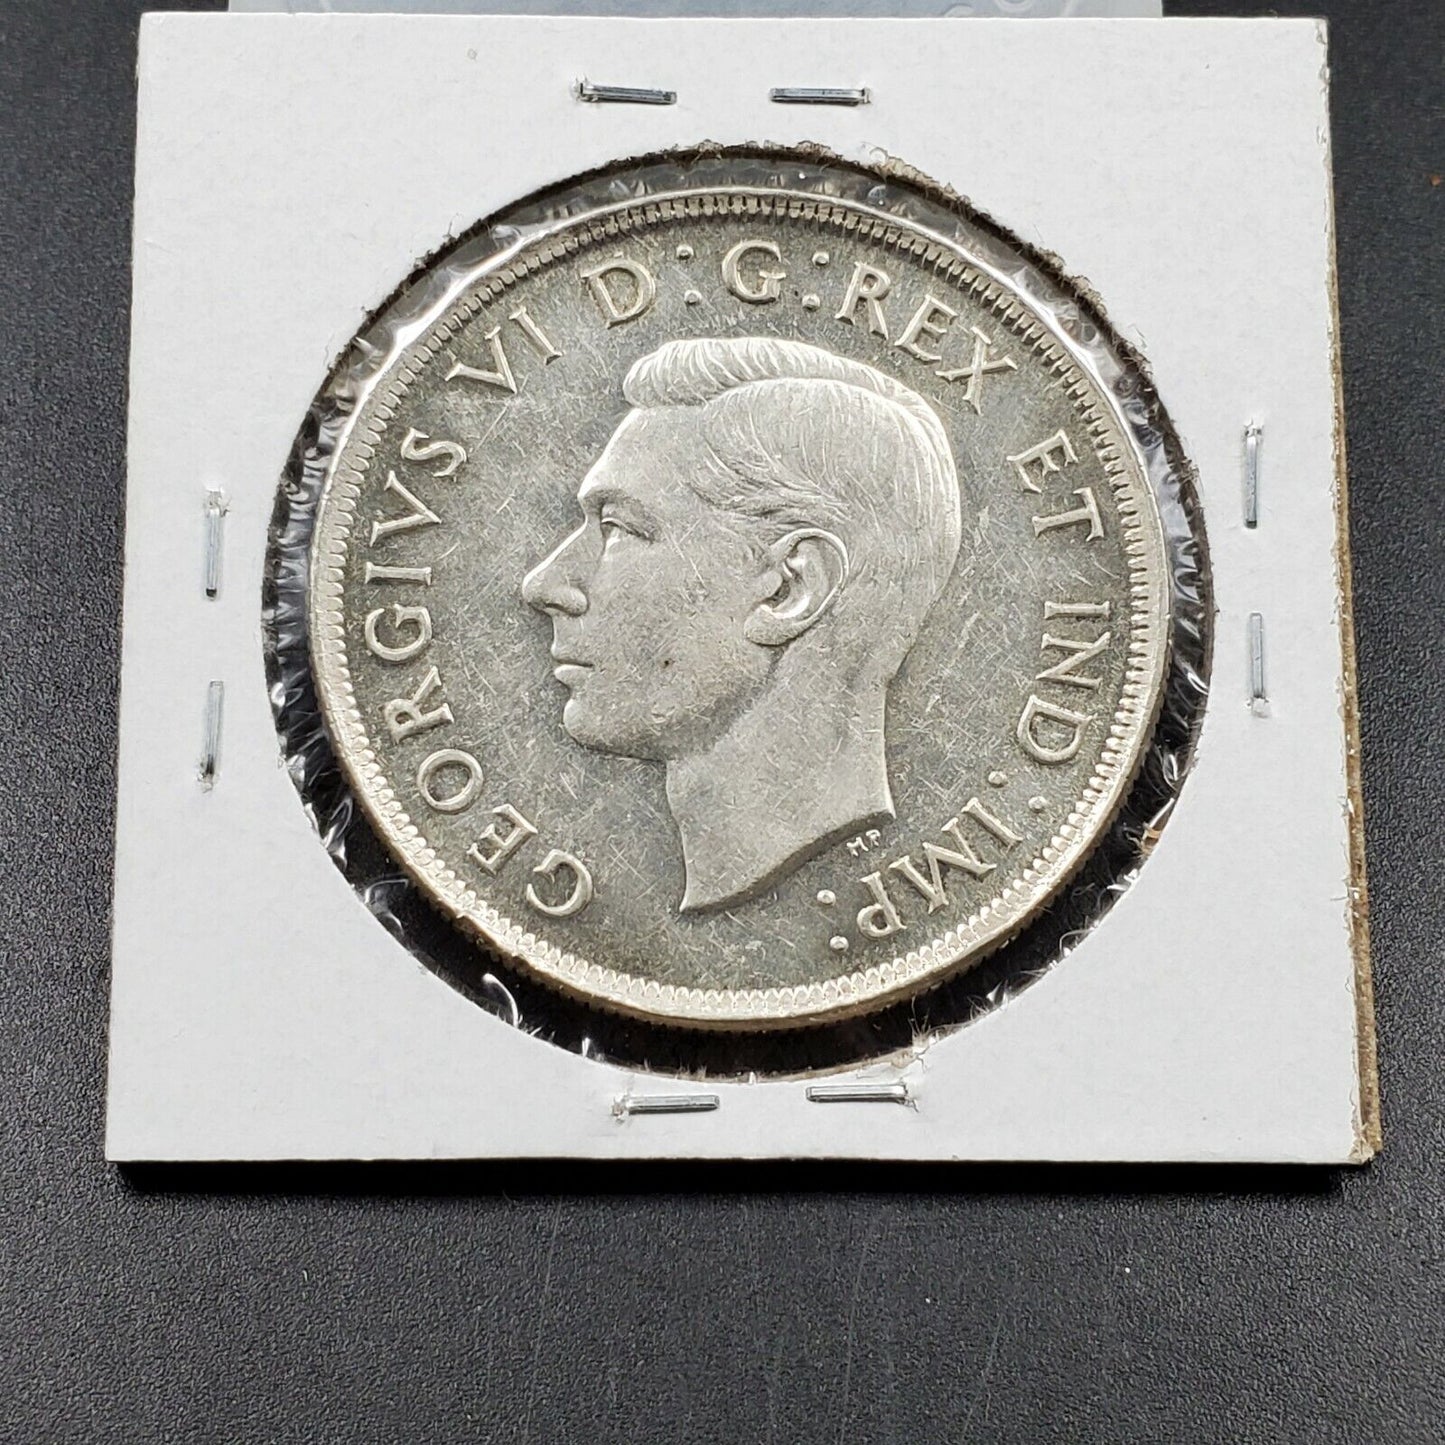 1939 Canada Silver $1 Dollar Coin Average UNC Uncirculated condition